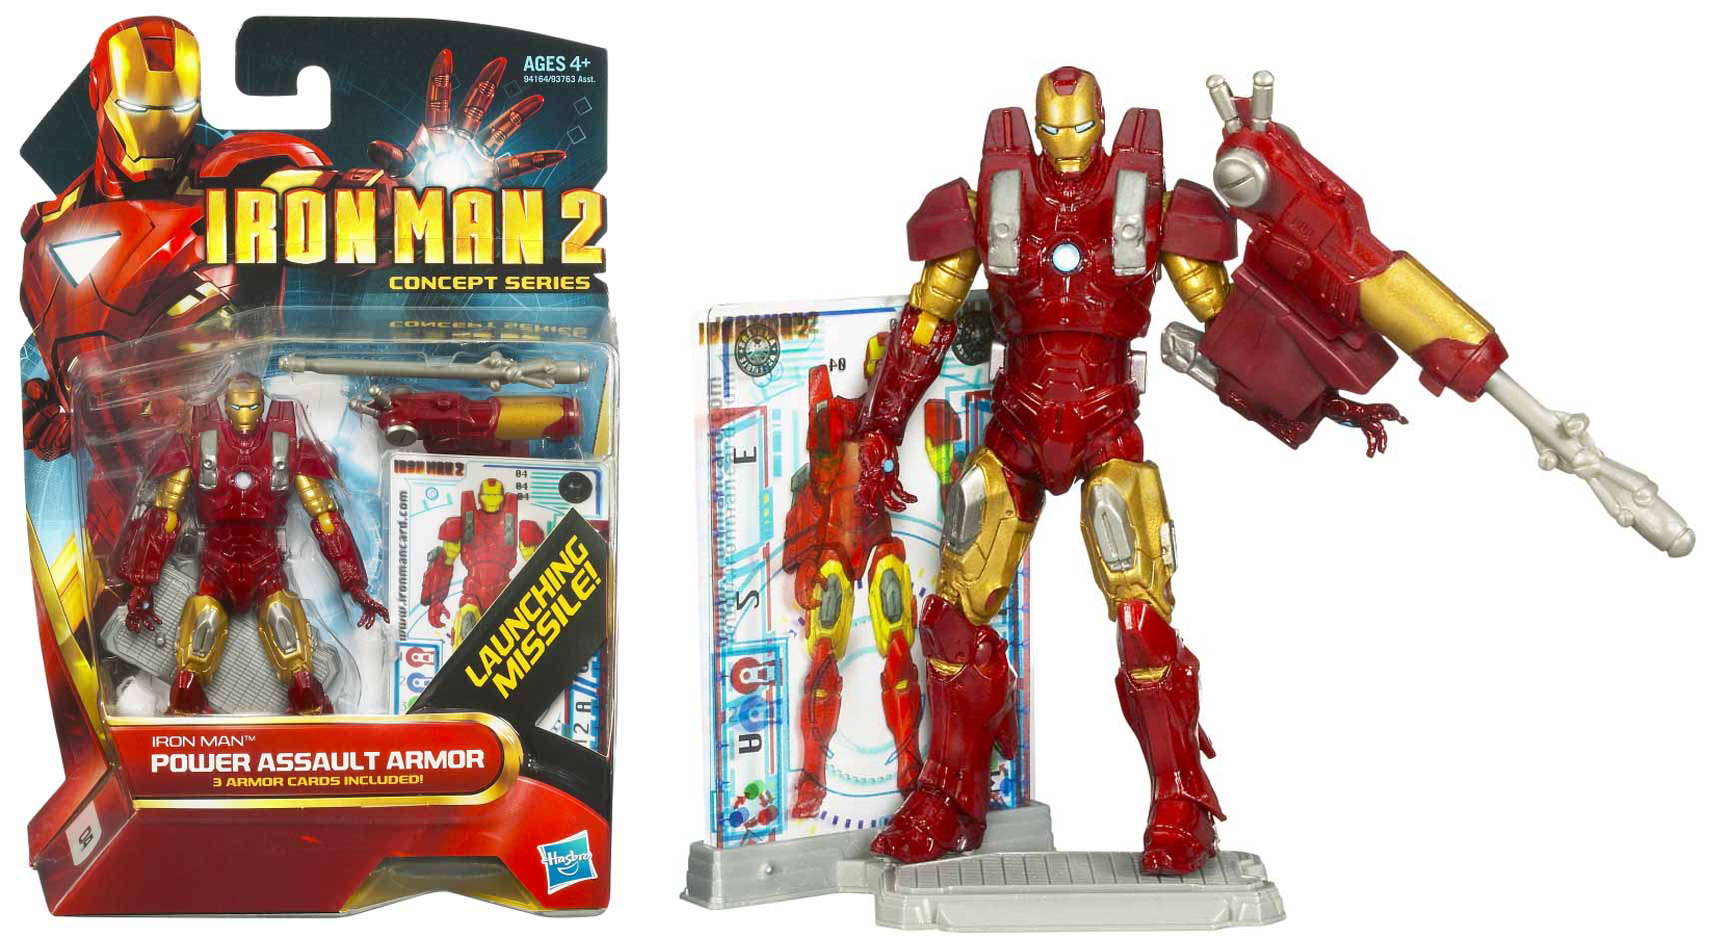 Ironman2-toys-powerassault.png